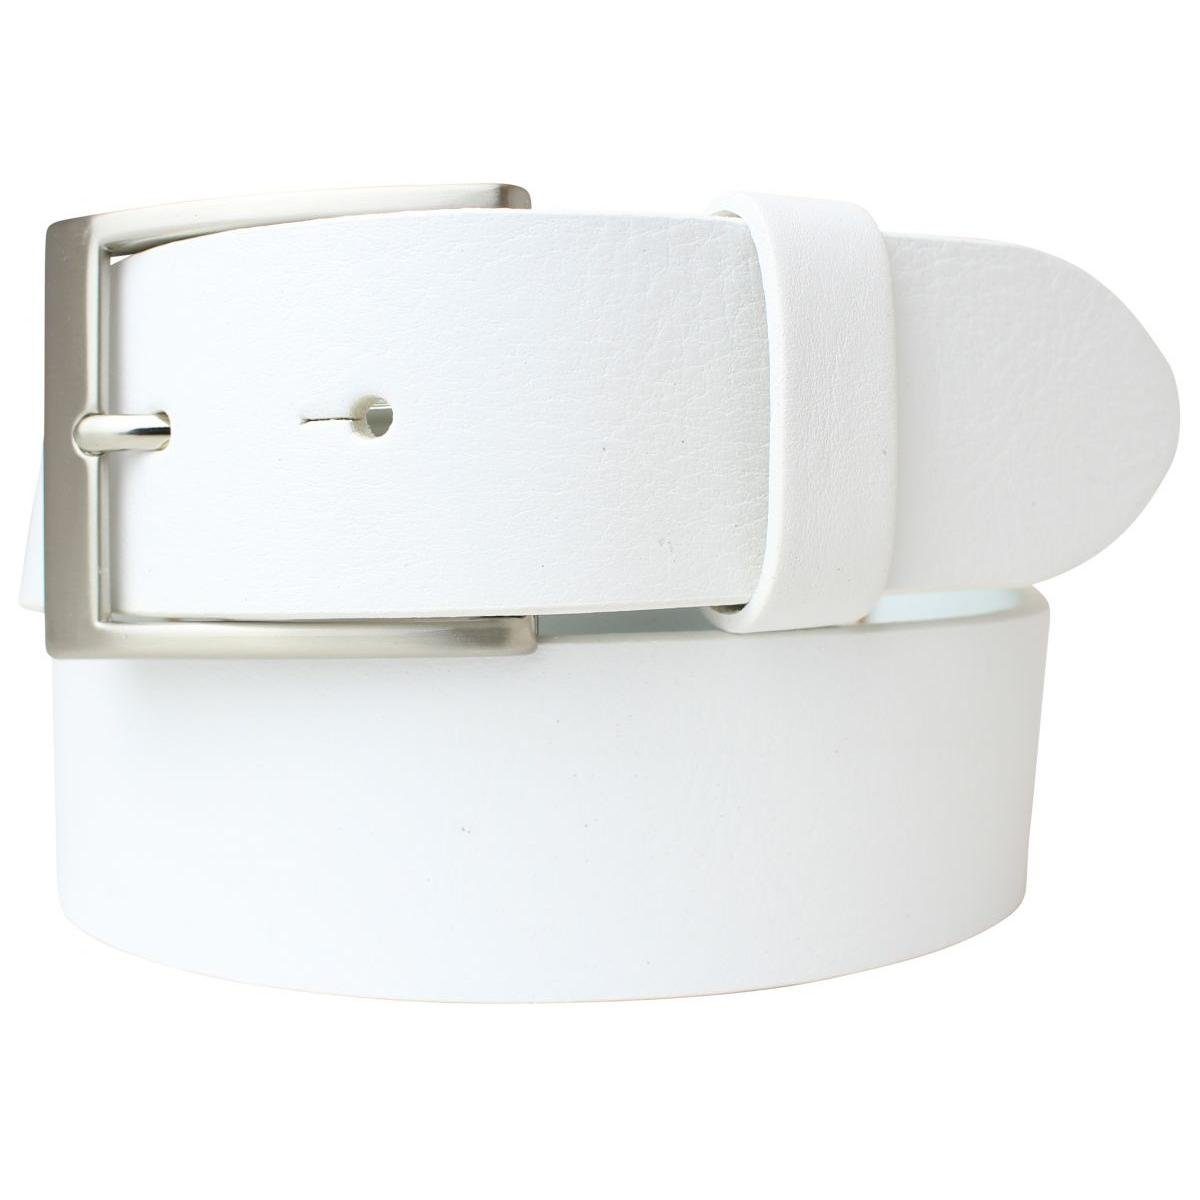 BELTINGER Ledergürtel Hochwertiger Gürtel mit Edelstahl-Gürtelschnalle aus Vollrindleder 4 c Weiß, Silber